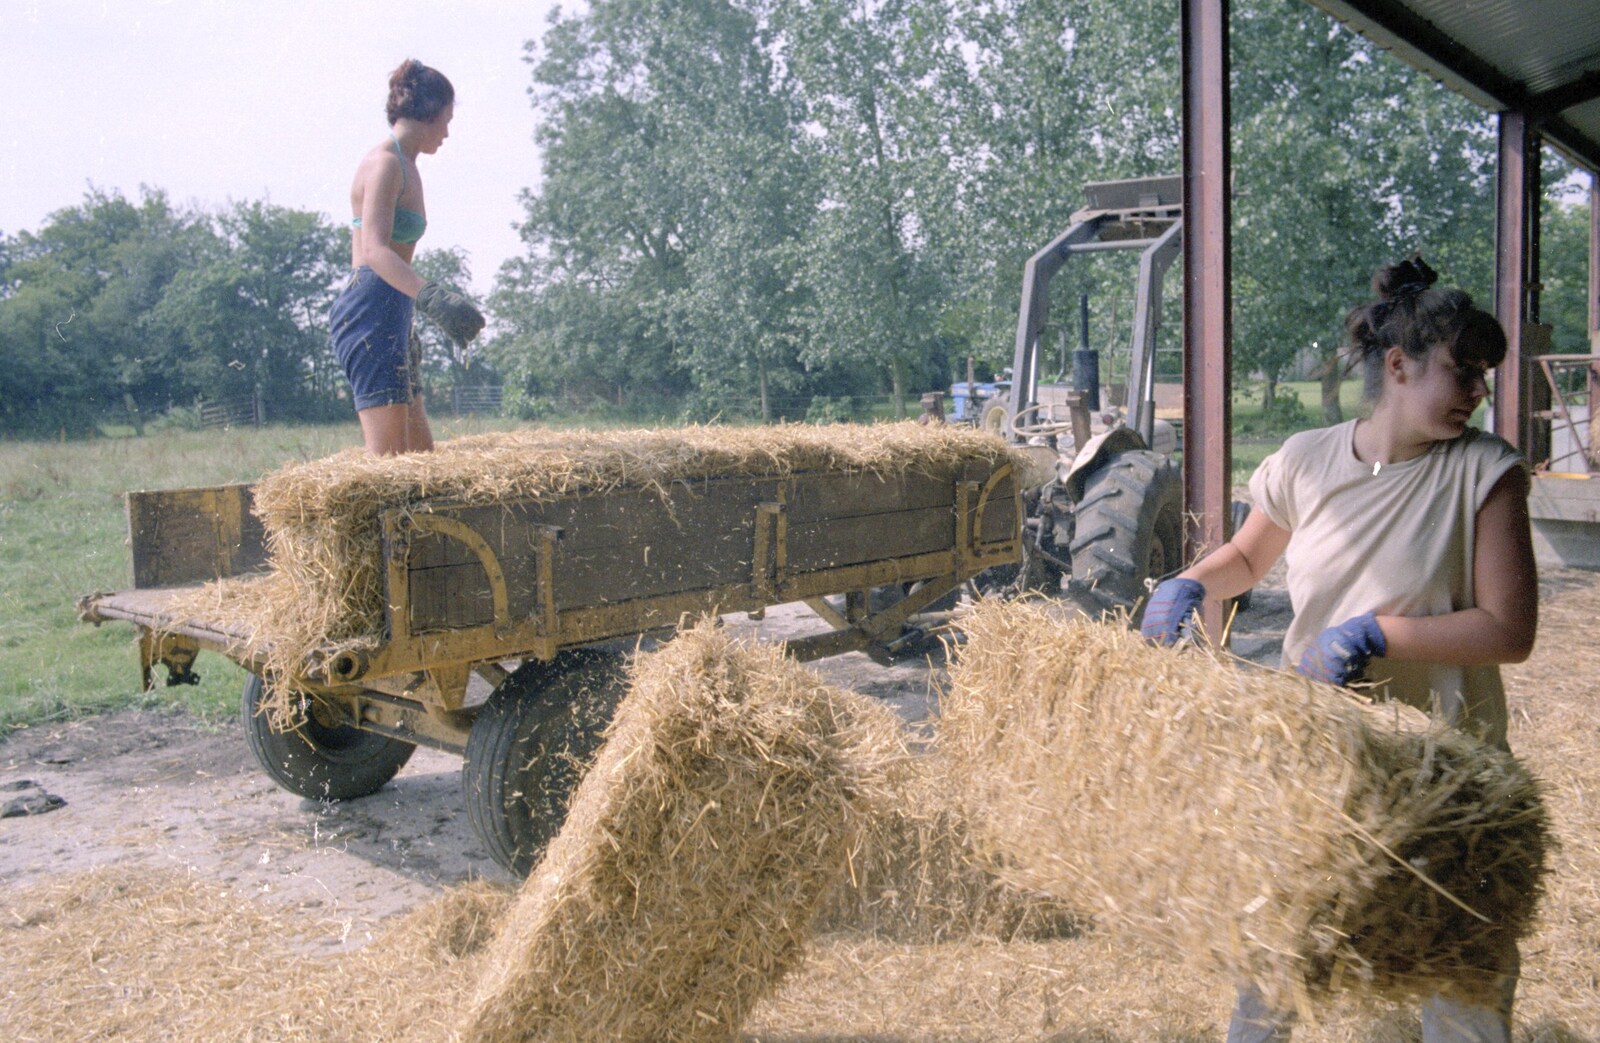 Working on the Harvest, Tibenham, Norfolk - 11th August 1992: Rachel chucks bales around in the shed